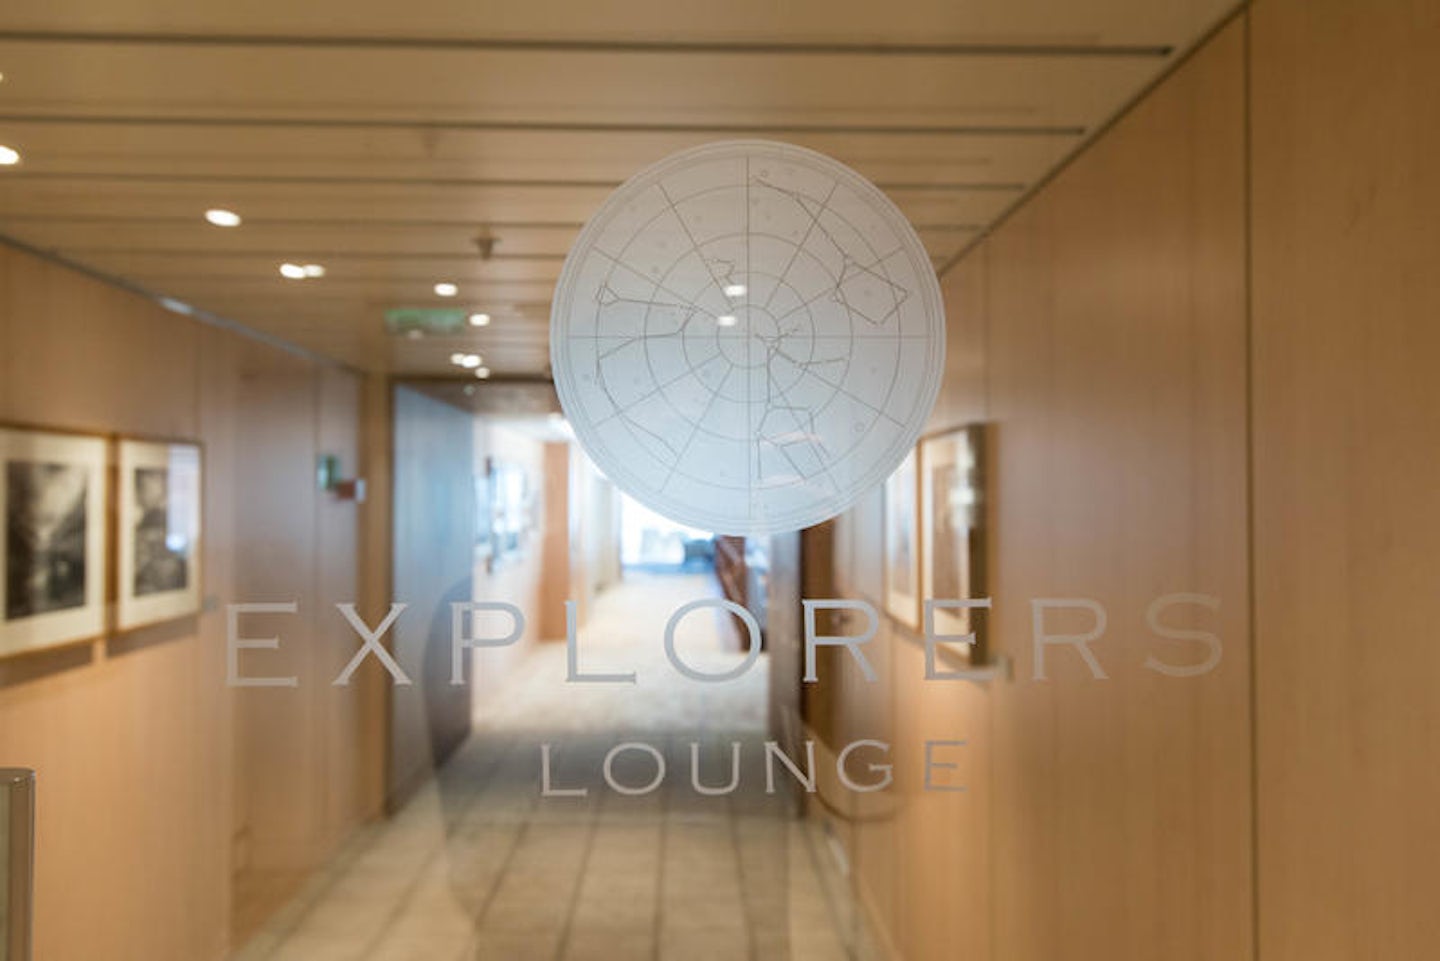 Explorers' Lounge on Viking Sky